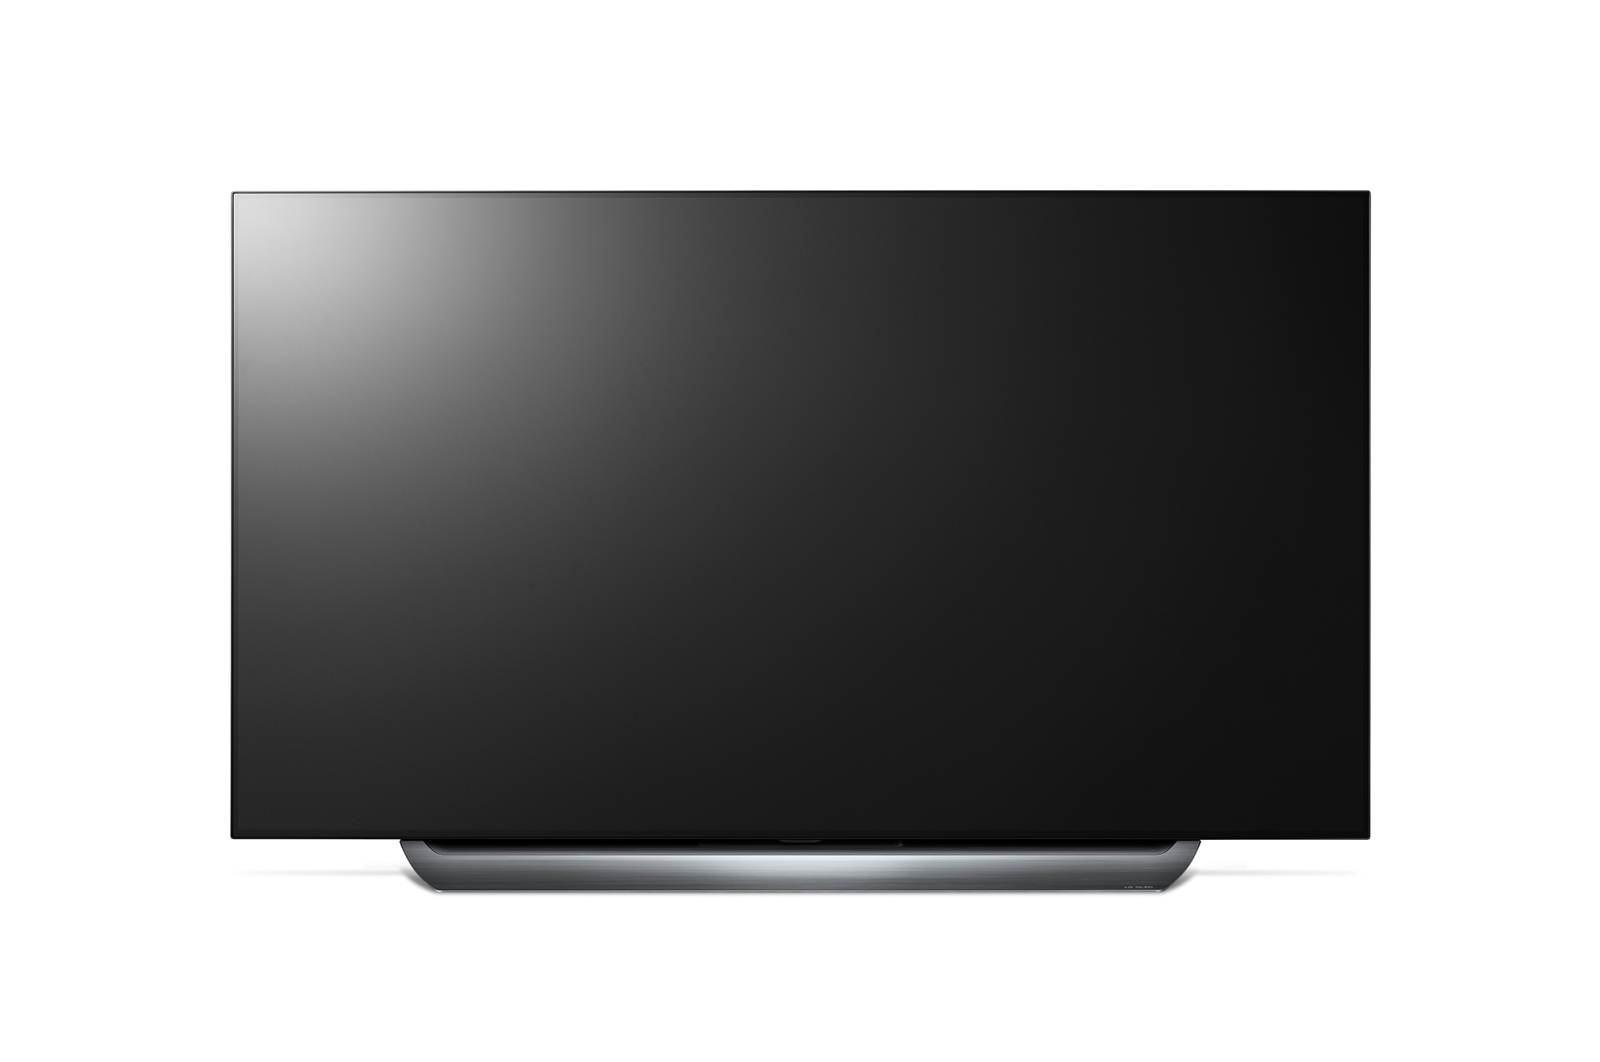 Smart Tivi OLED LG 65 inch 65C8PTA, 4K Cinema HDR (Model 2018) màn hình đen